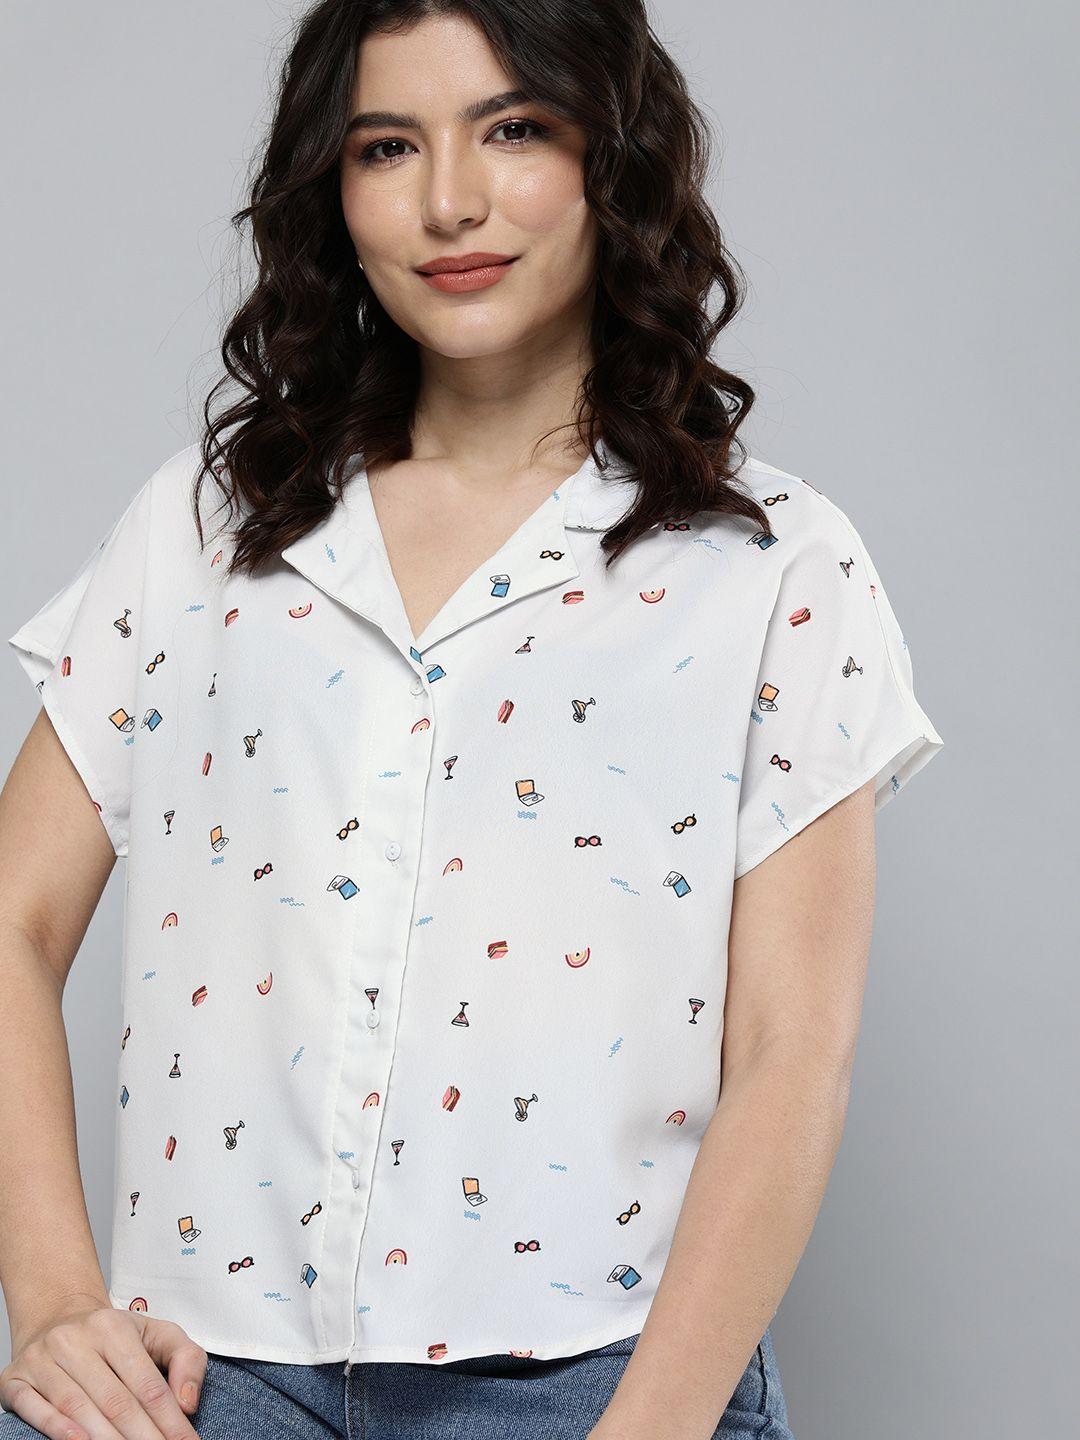 mast & harbour women's white geometrical printed short sleeved shirt